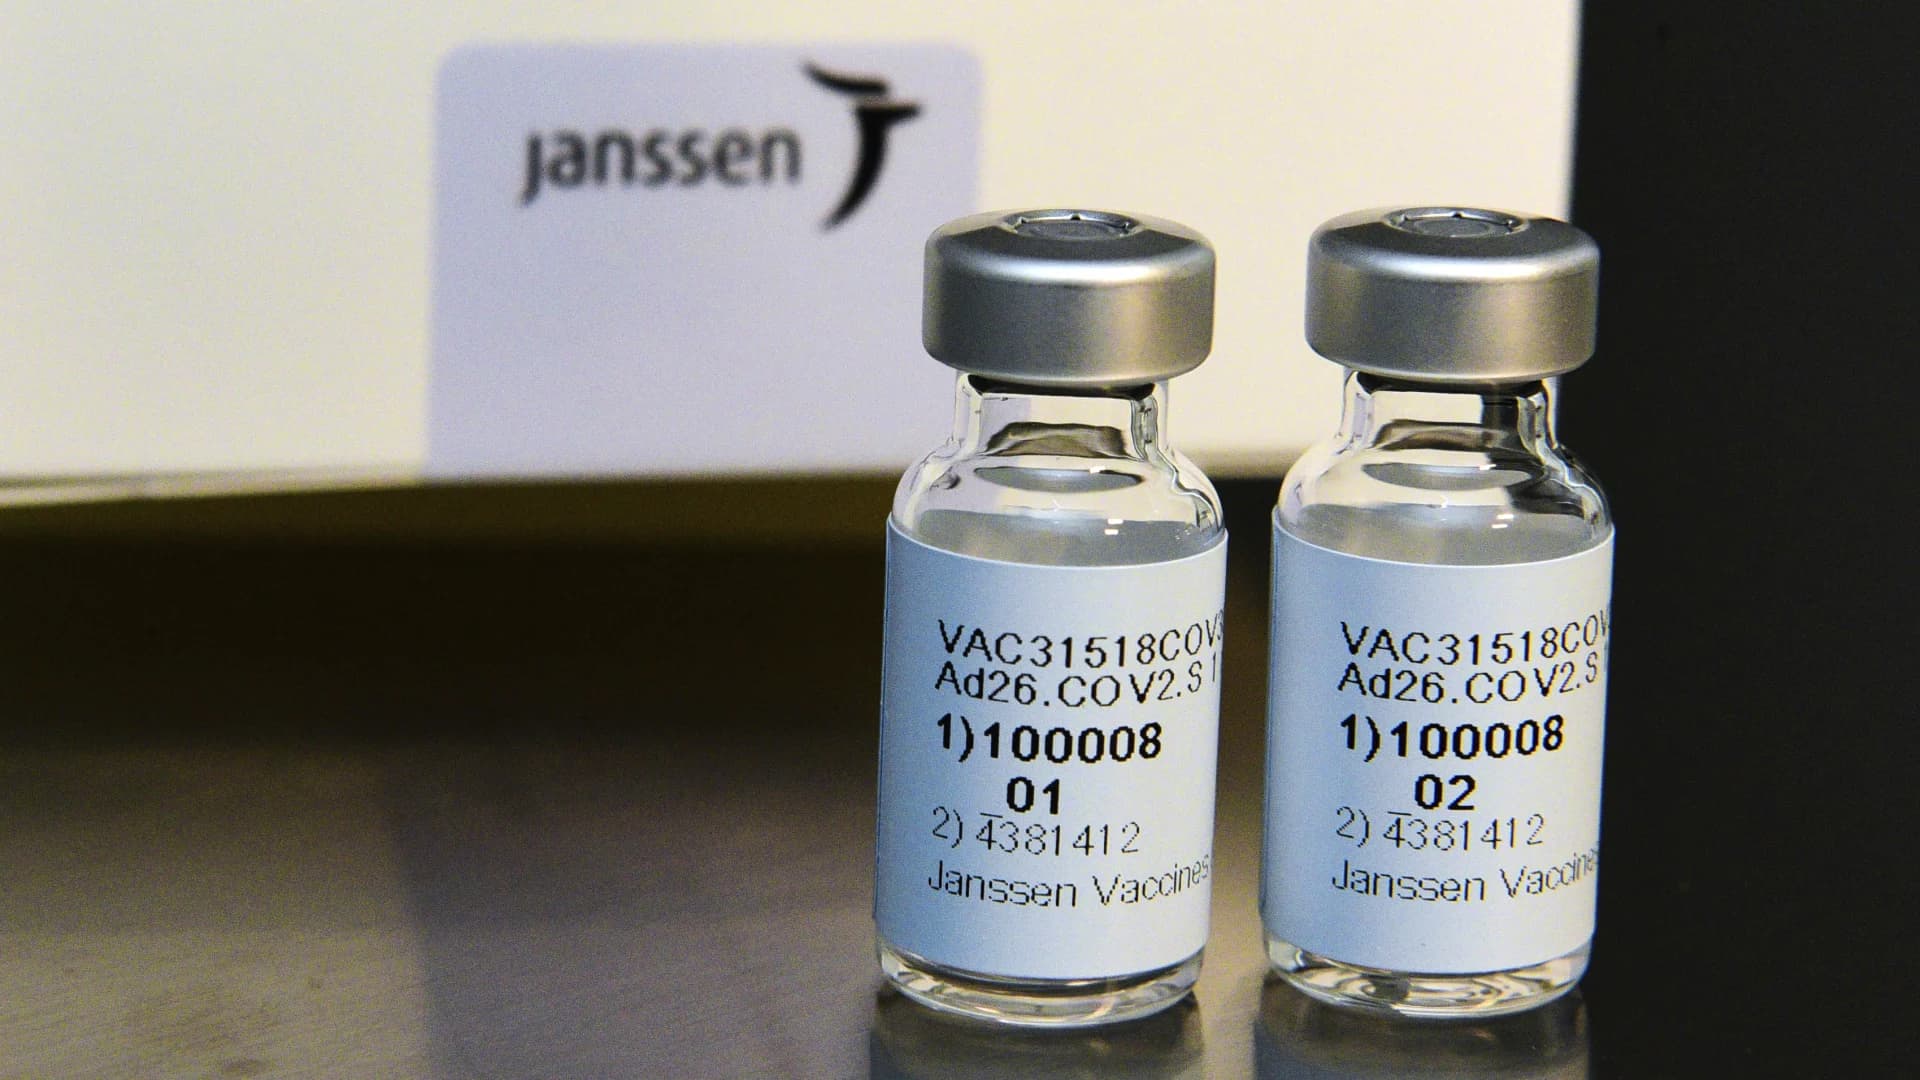 EU regulator recommends warning on labels for Johnson & Johnson vaccine